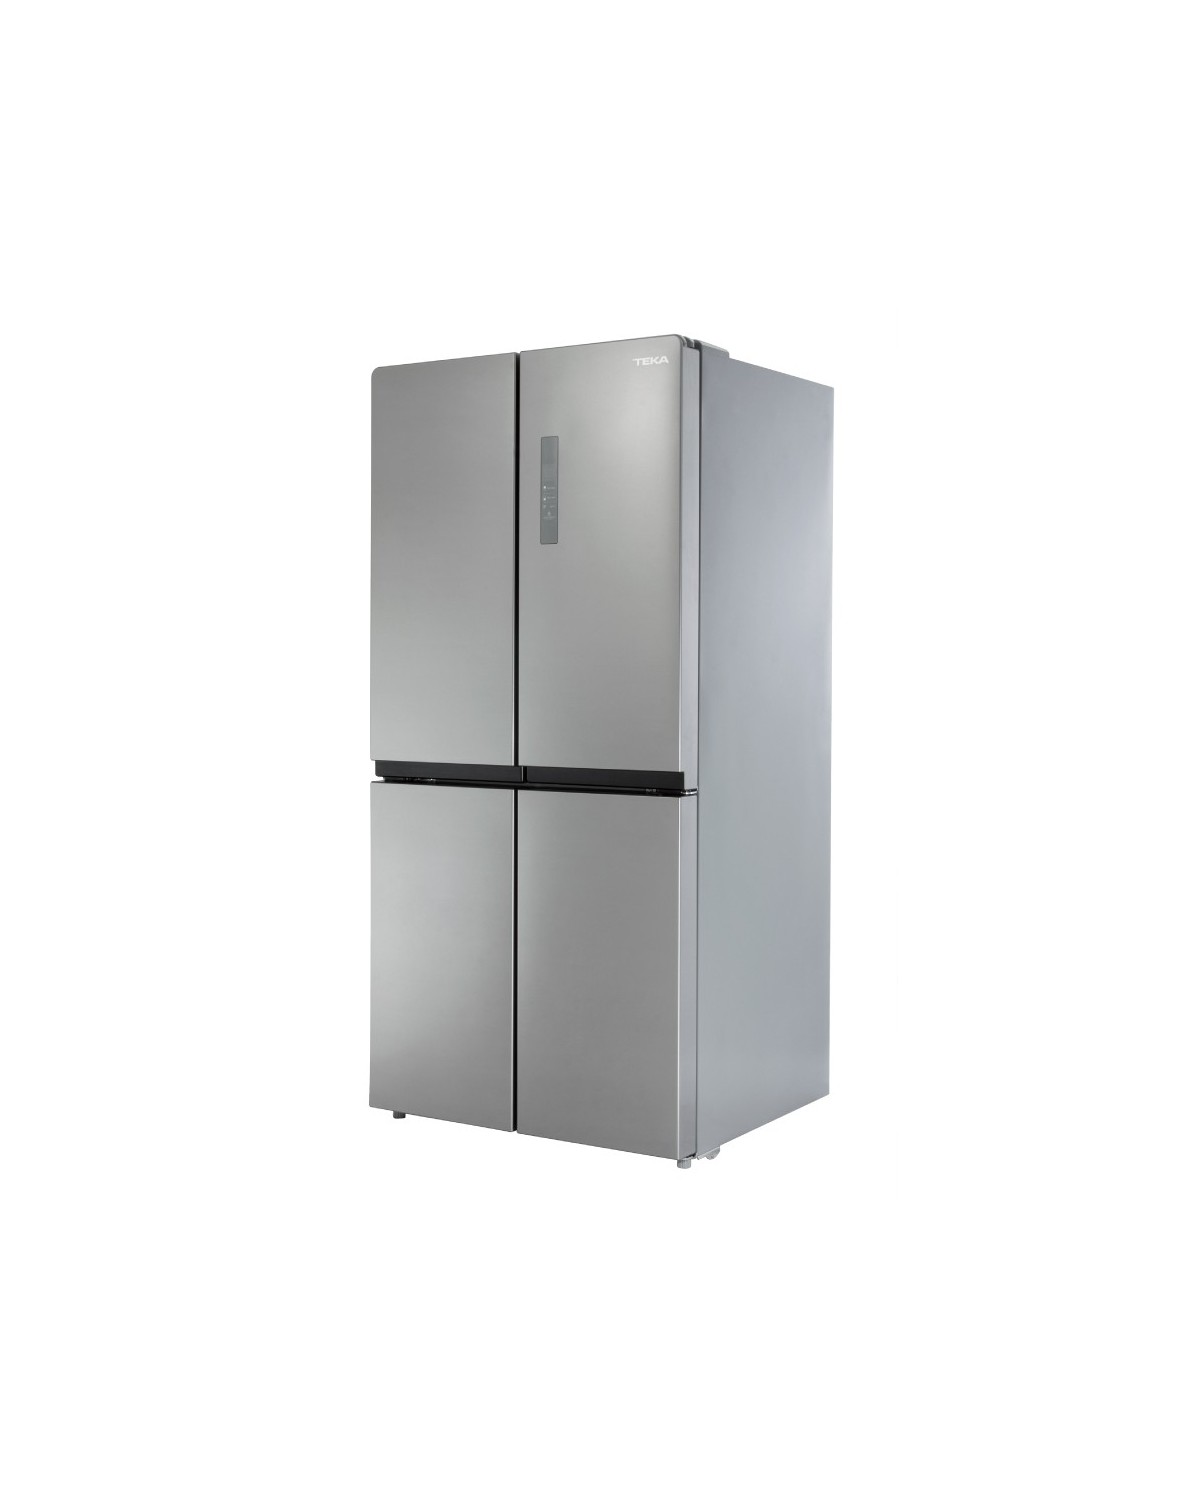 Refrigerador Teka Four Door TOTAL RMF 74810 SS REF.  113430015